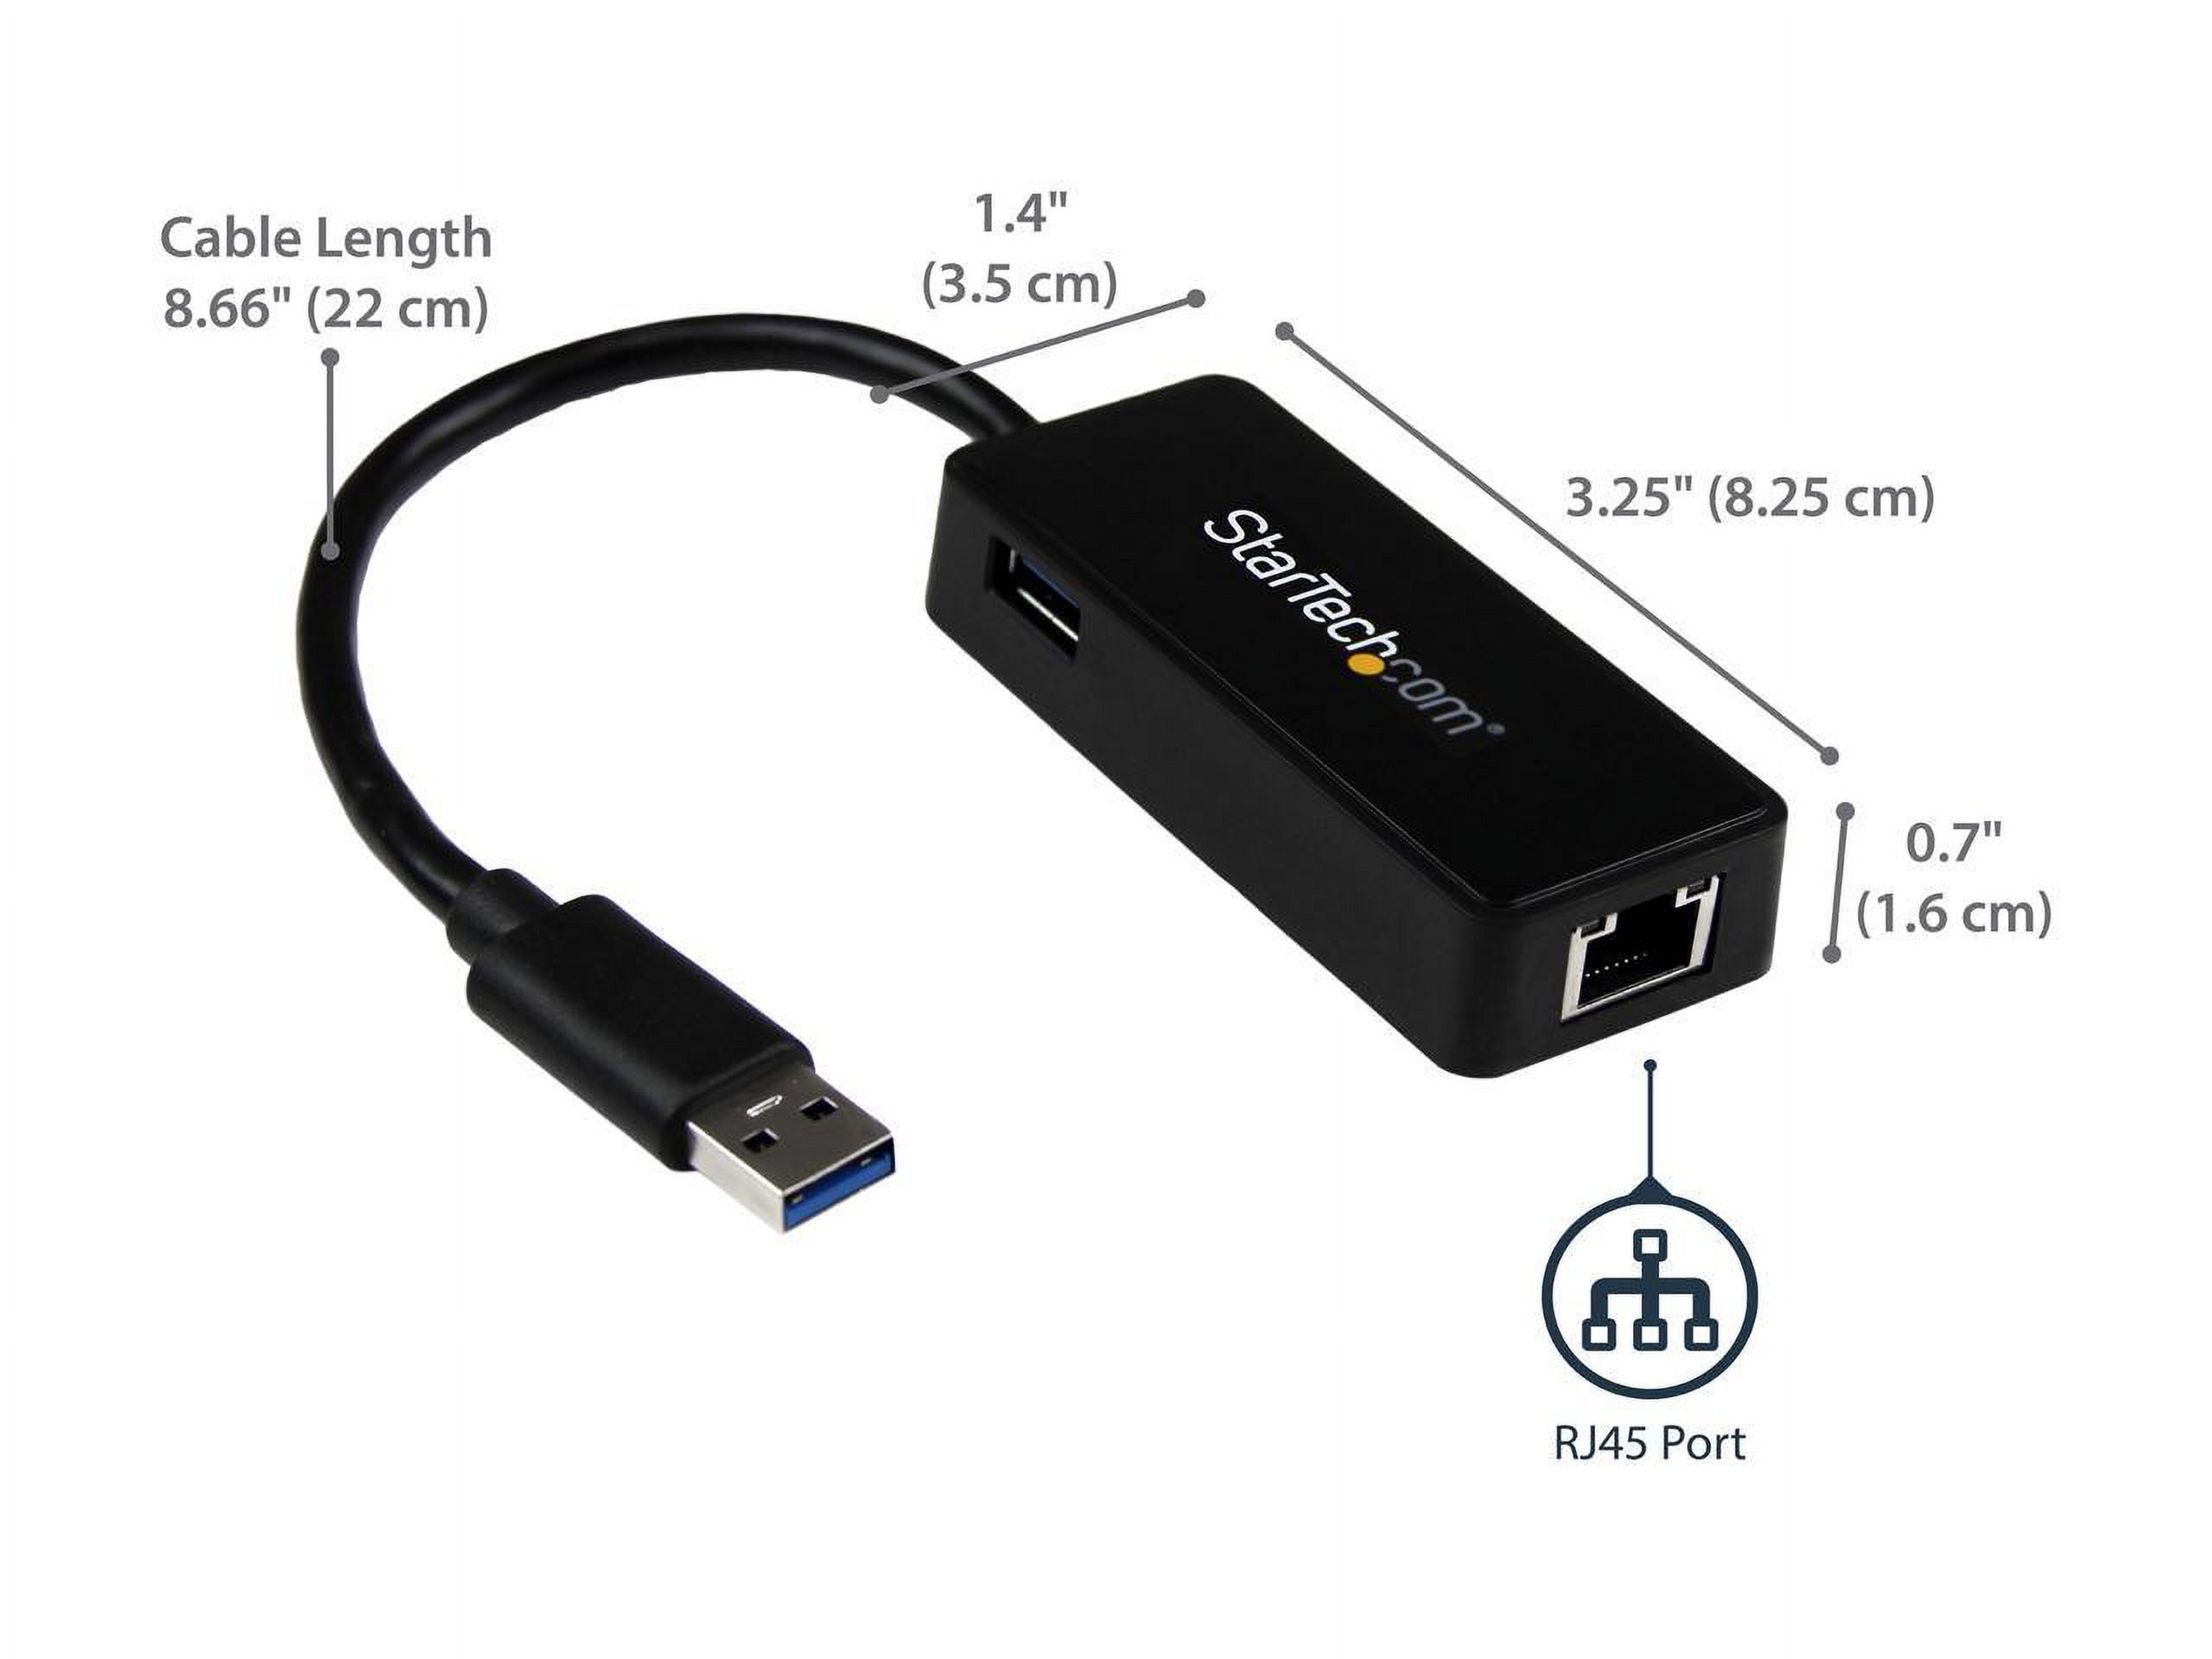 StarTech USB31000SPTB USB 3.0 to Gigabit Ethernet Adapter NIC w/ USB Port - Black - image 2 of 6